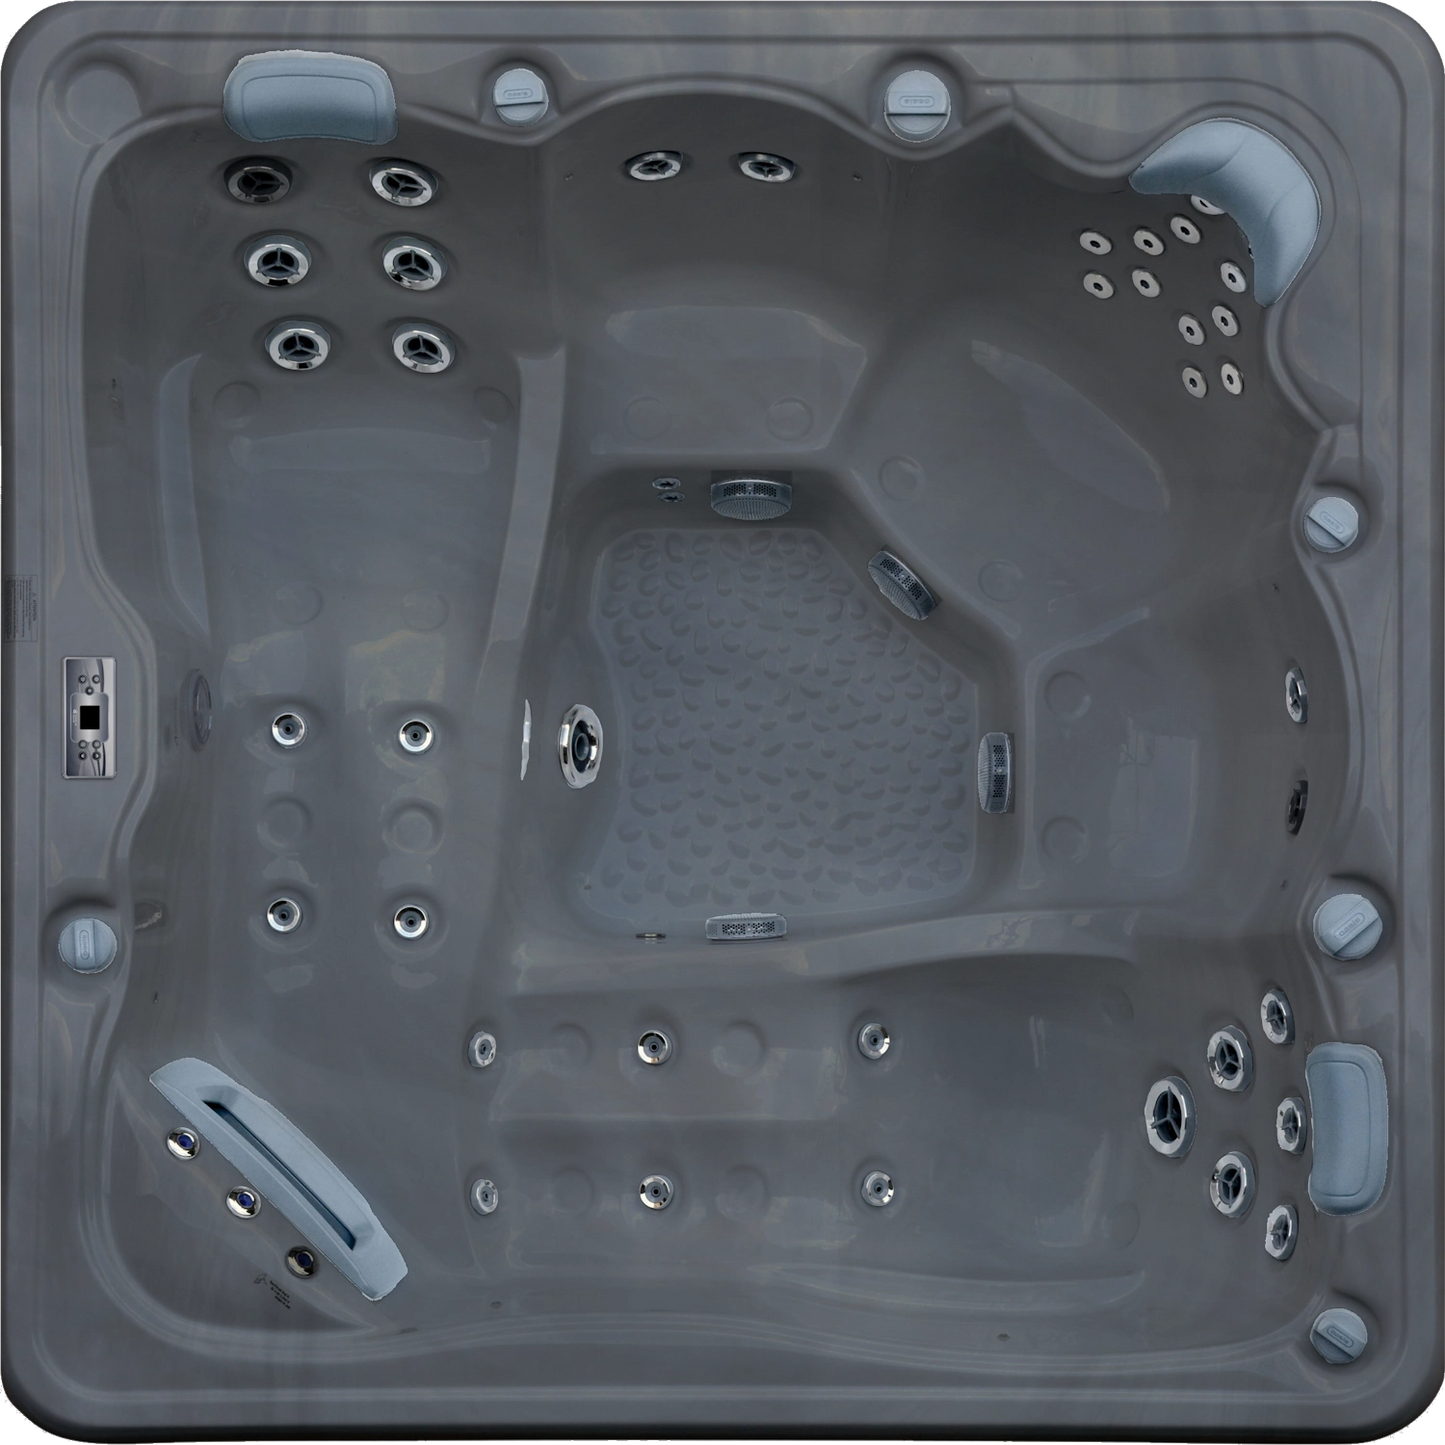 HE-570 Platinum - 5 Person Hot Tub Oasis Spas